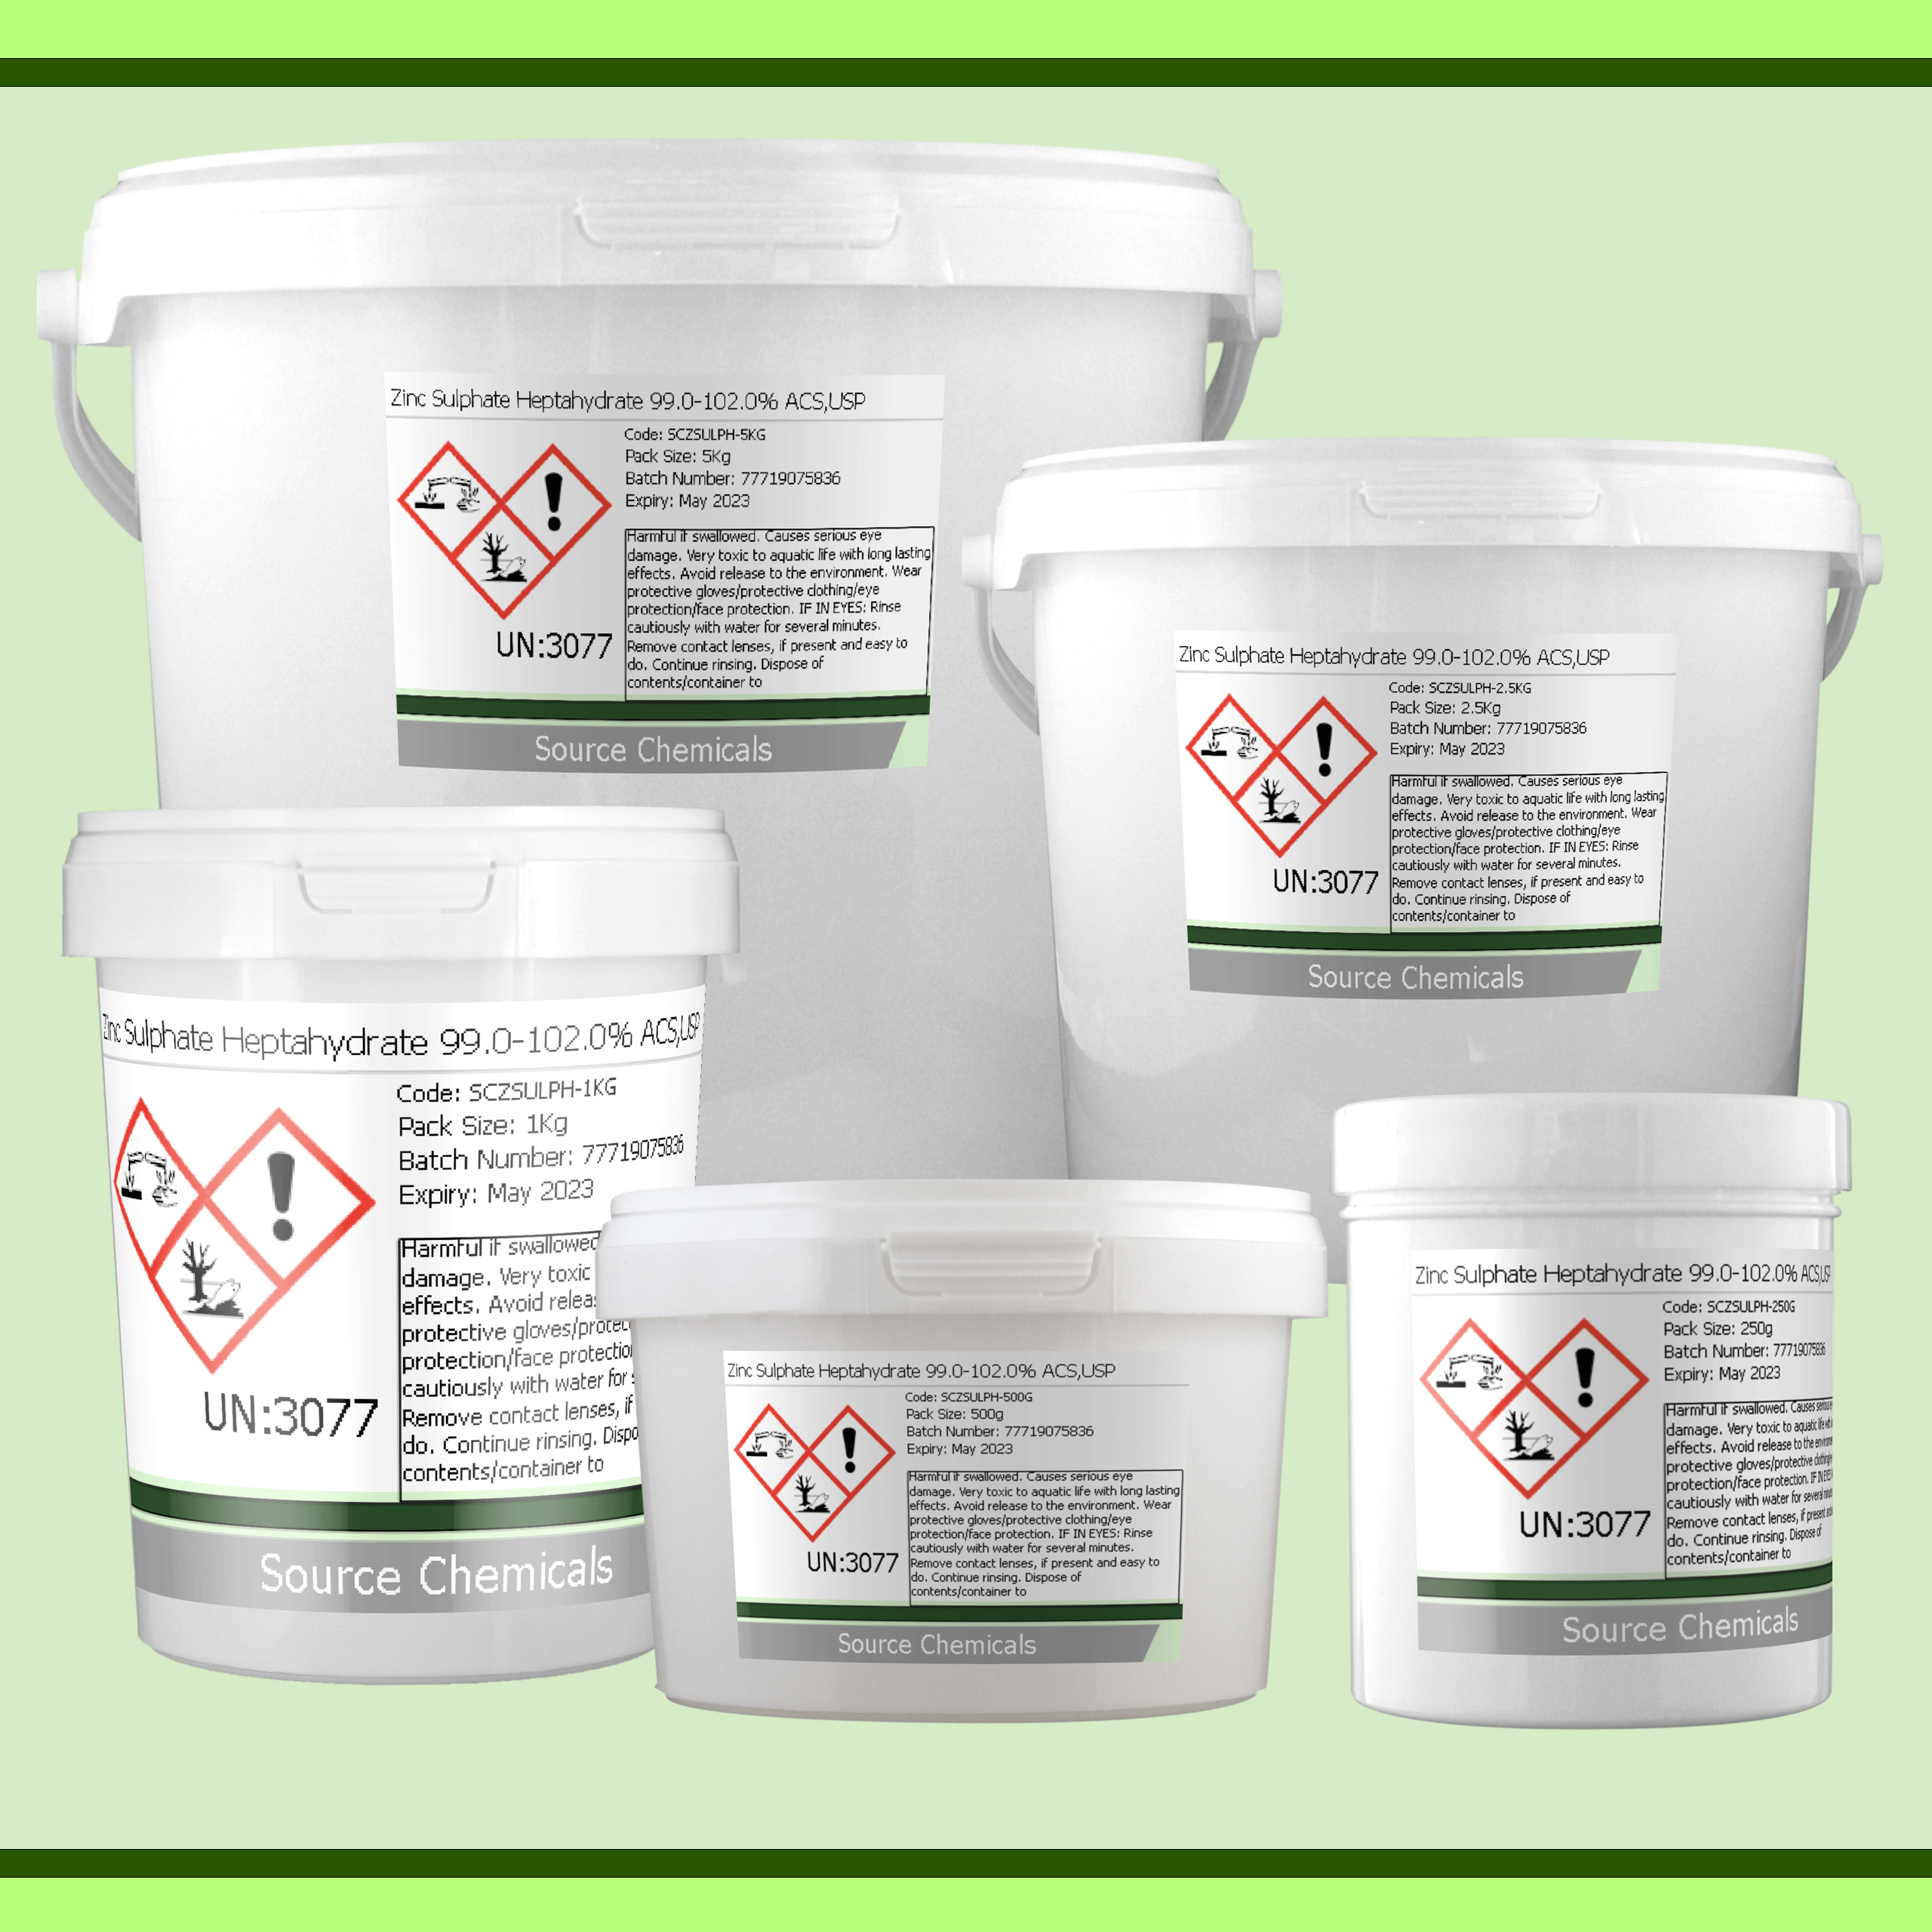 Zinc Sulphate Heptahydrate 99.0-102.0% ACS,USP